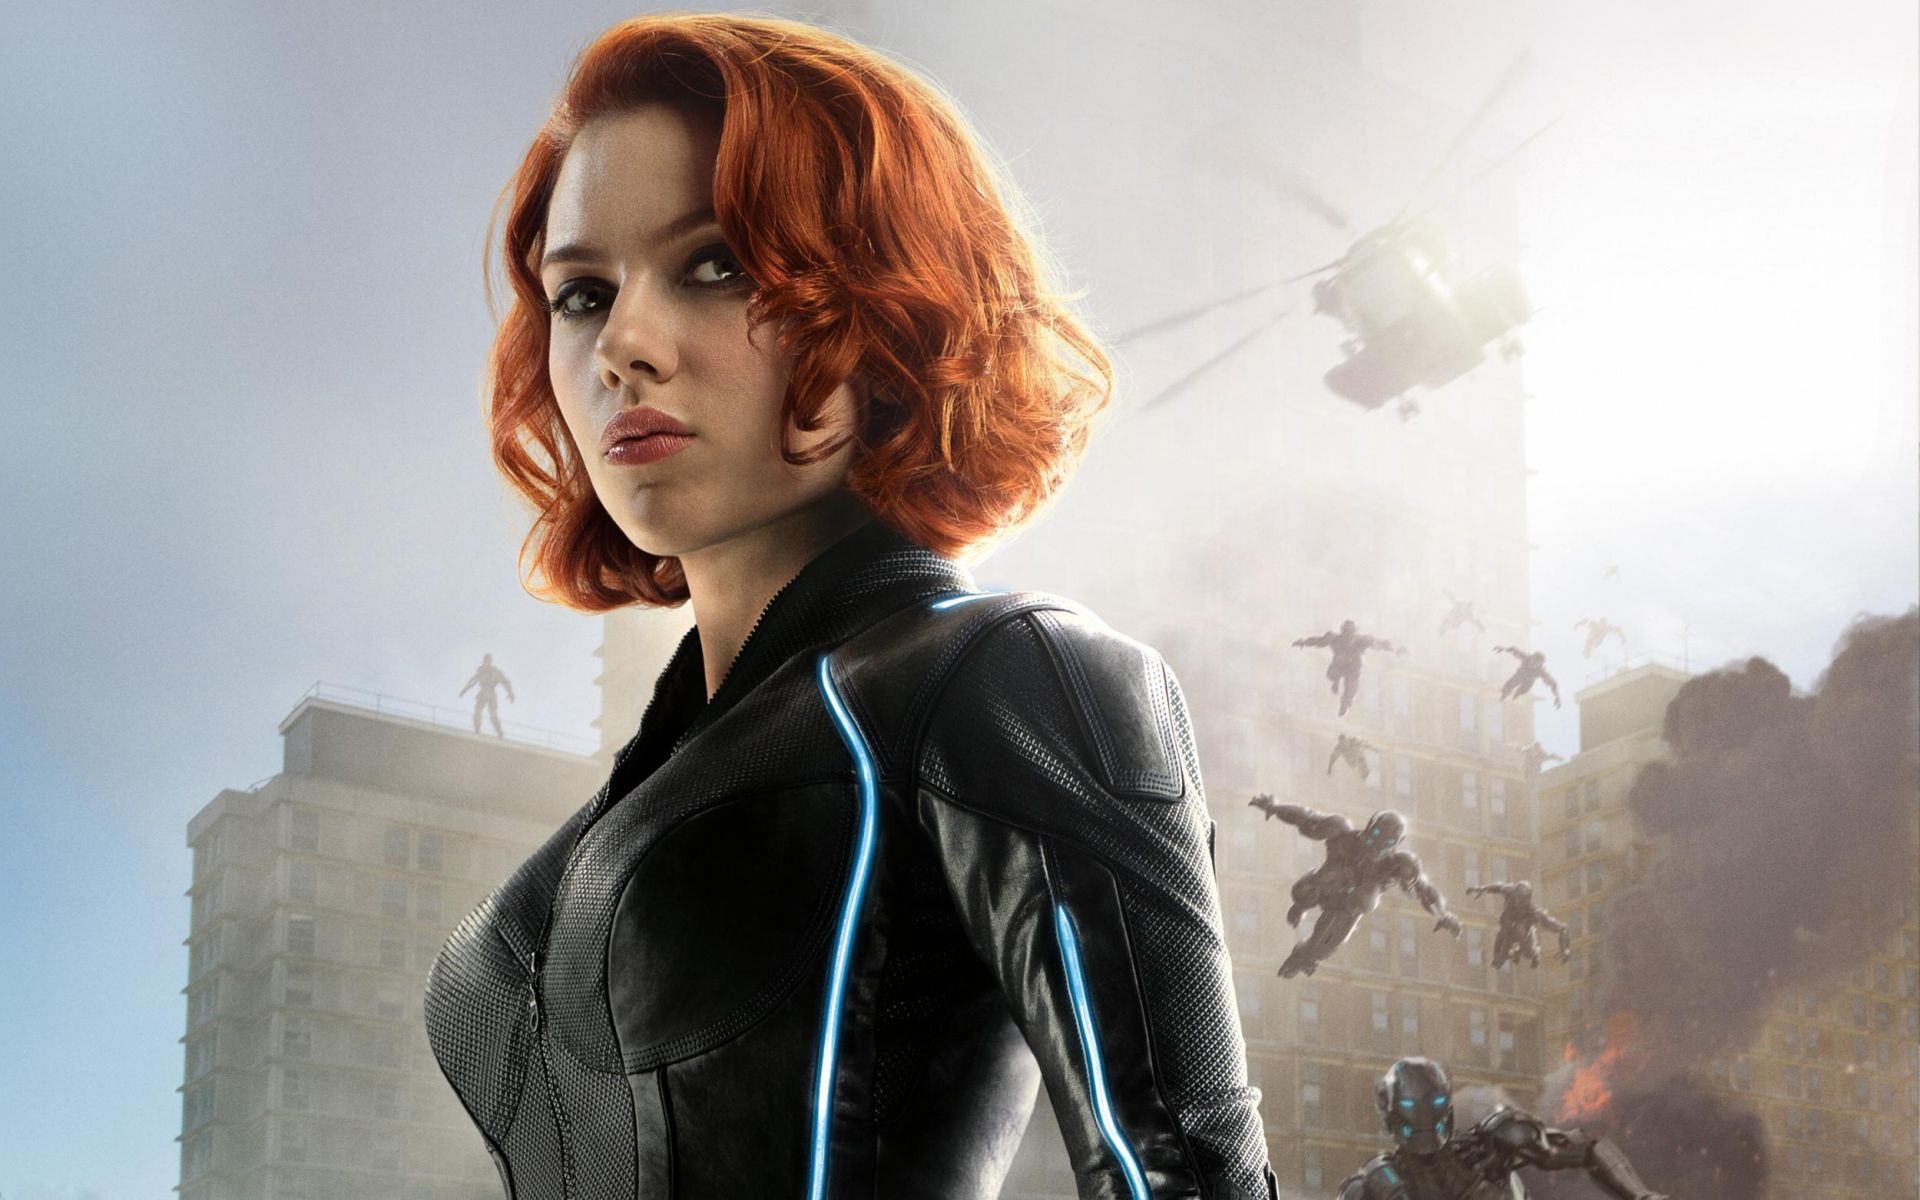 Black Widow' star Scarlett Johansson sues Disney over streaming strategy